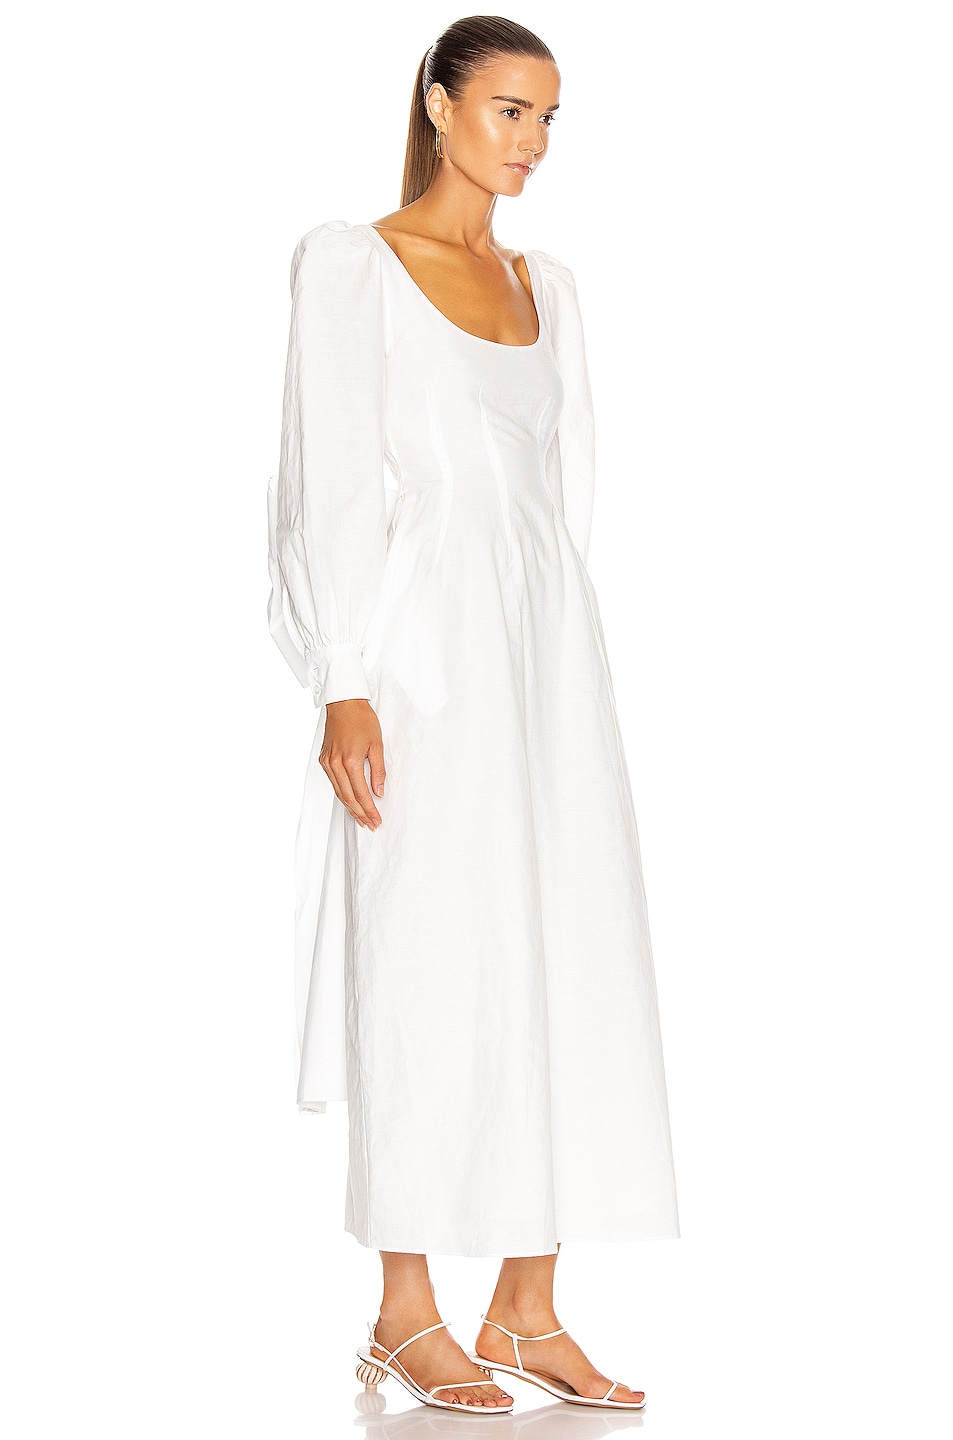 Brock Collection Quaneisha Maxi Dress in White | FWRD